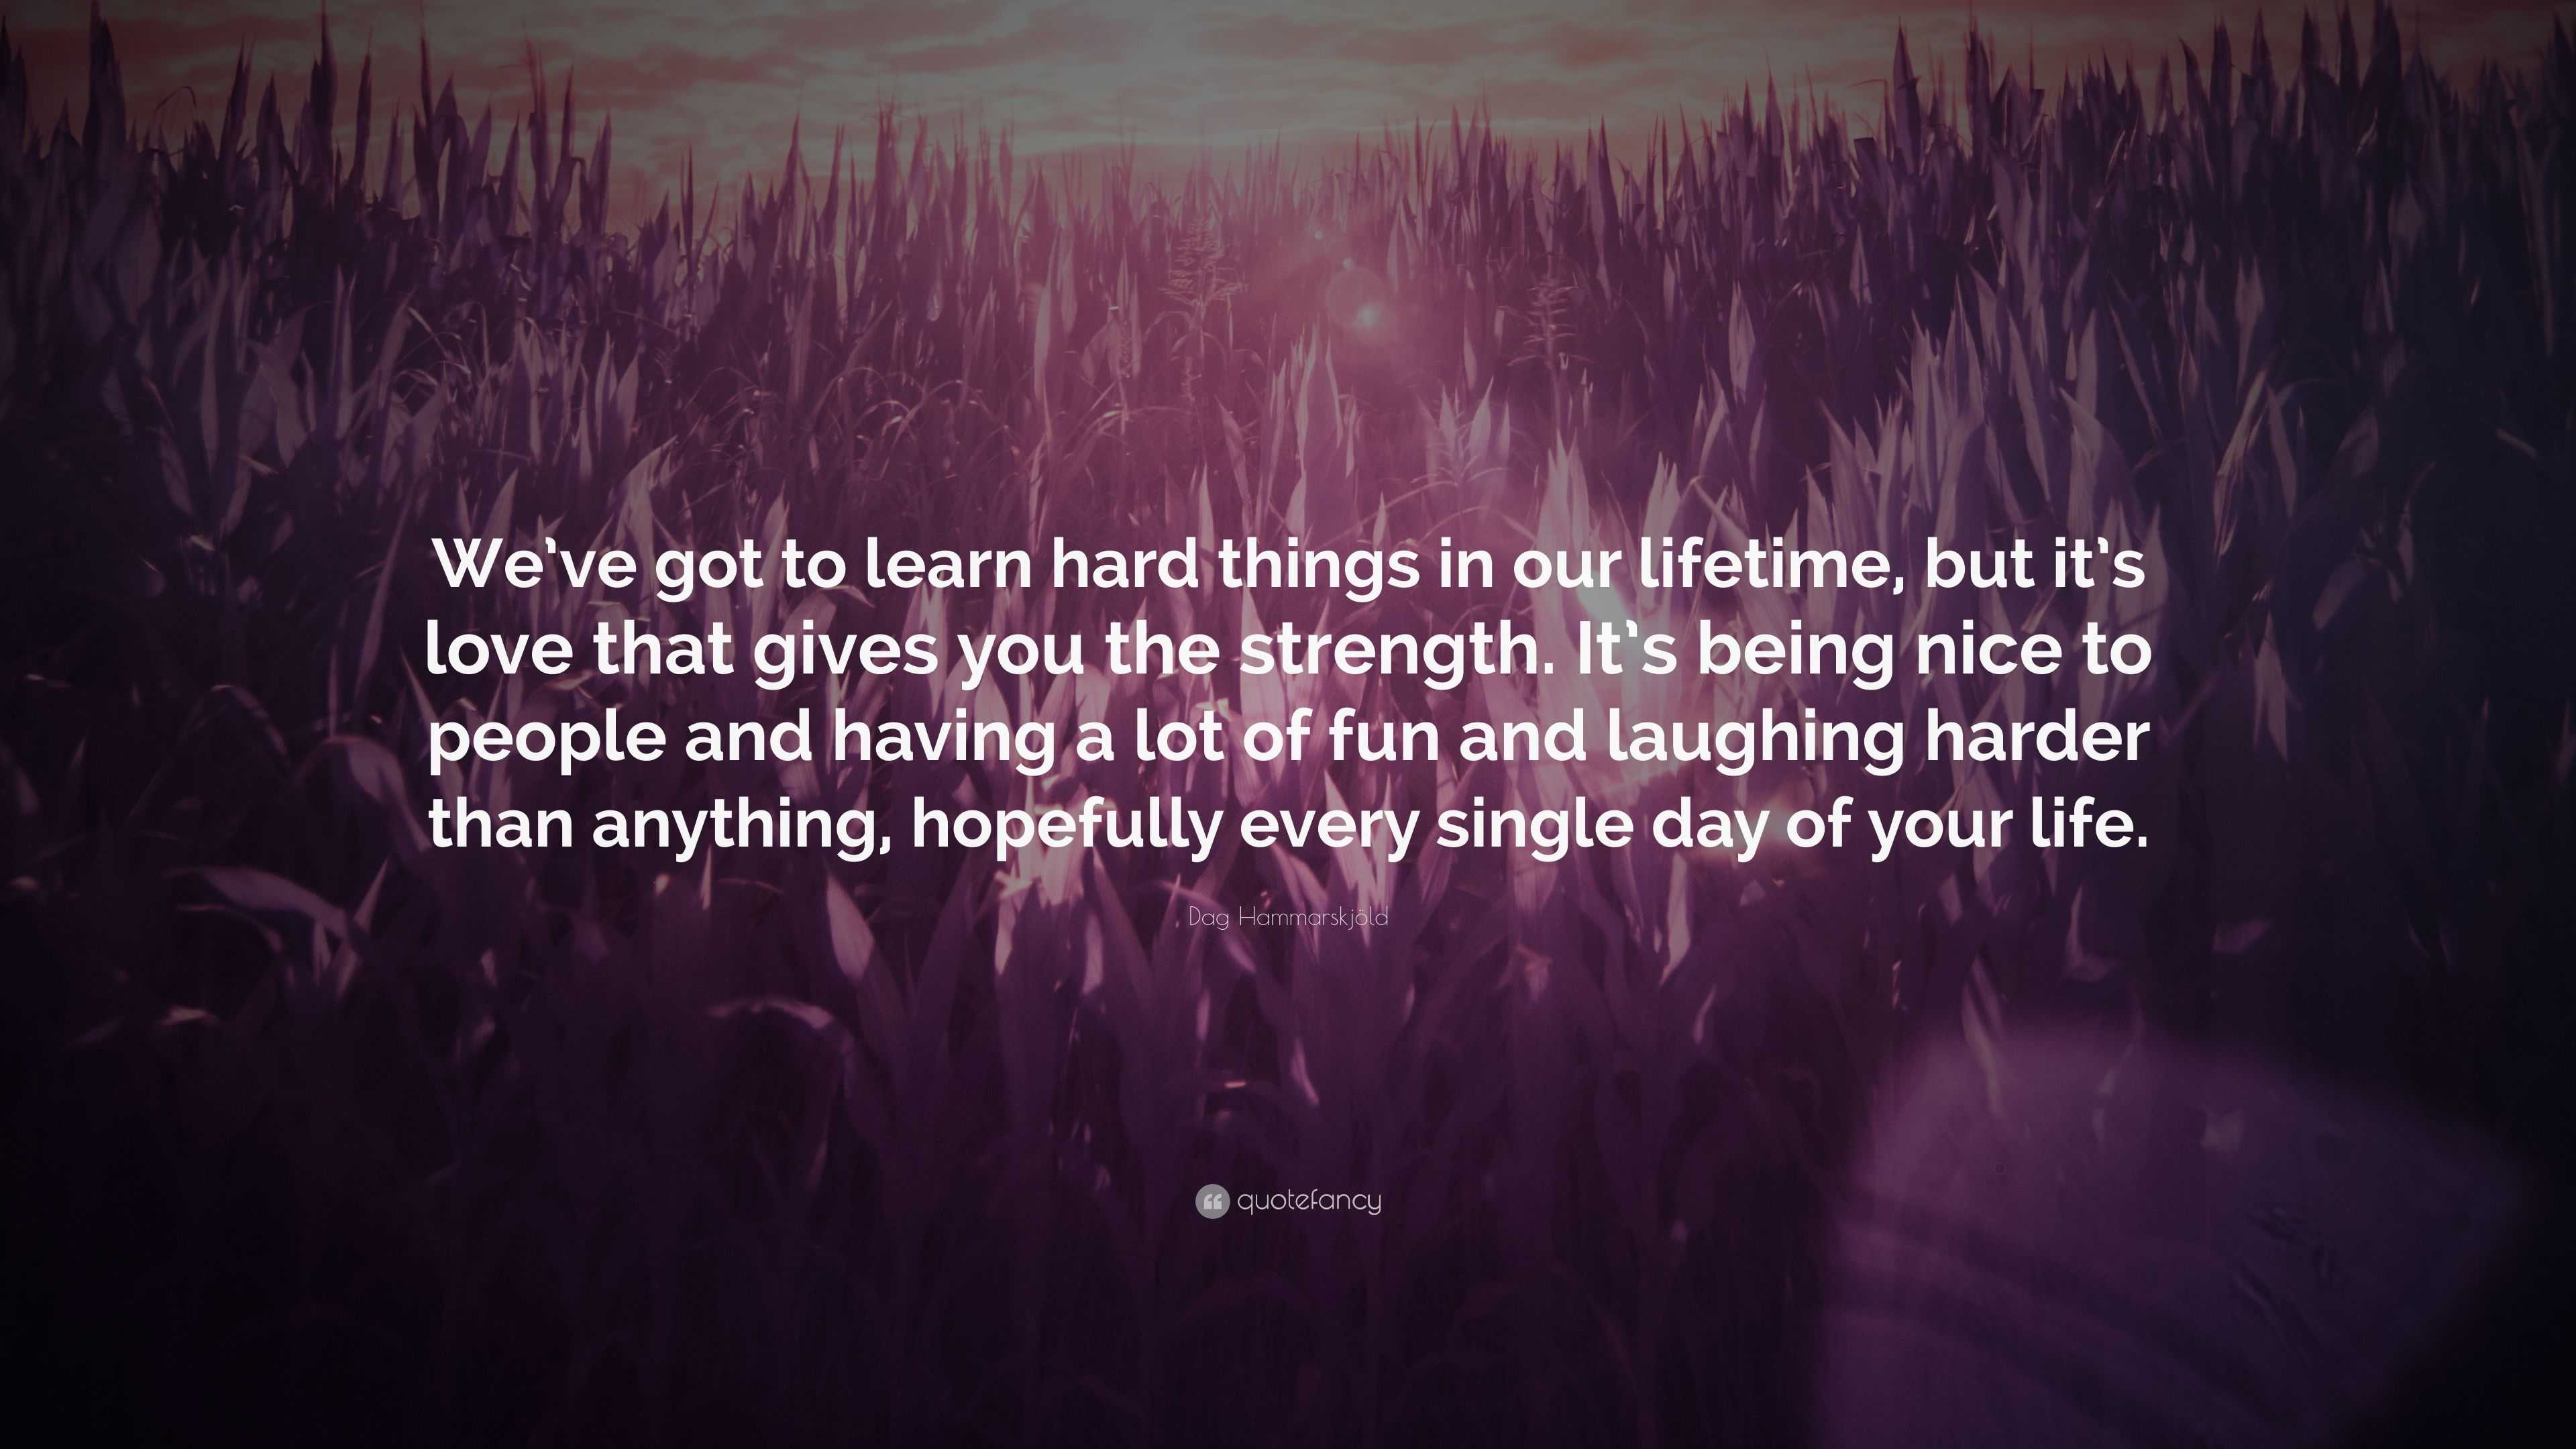 Dag Hammarskjöld Quote “We ve got to learn hard things in our lifetime